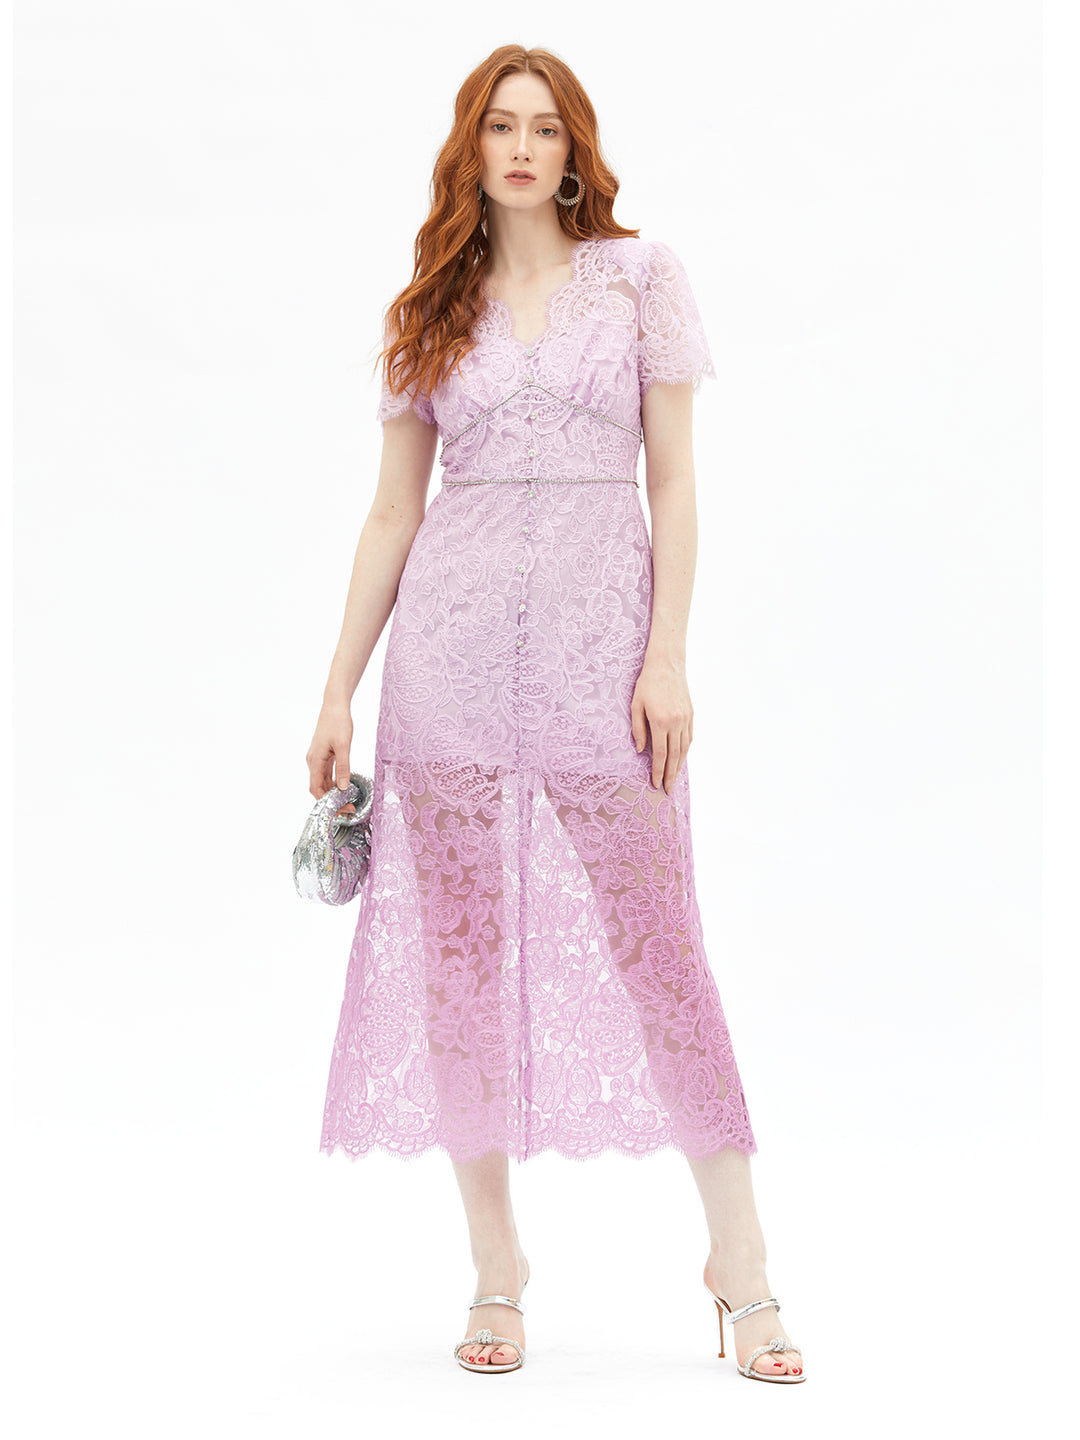 V-Neck Rhinestone Trim Gradient Lace Dress